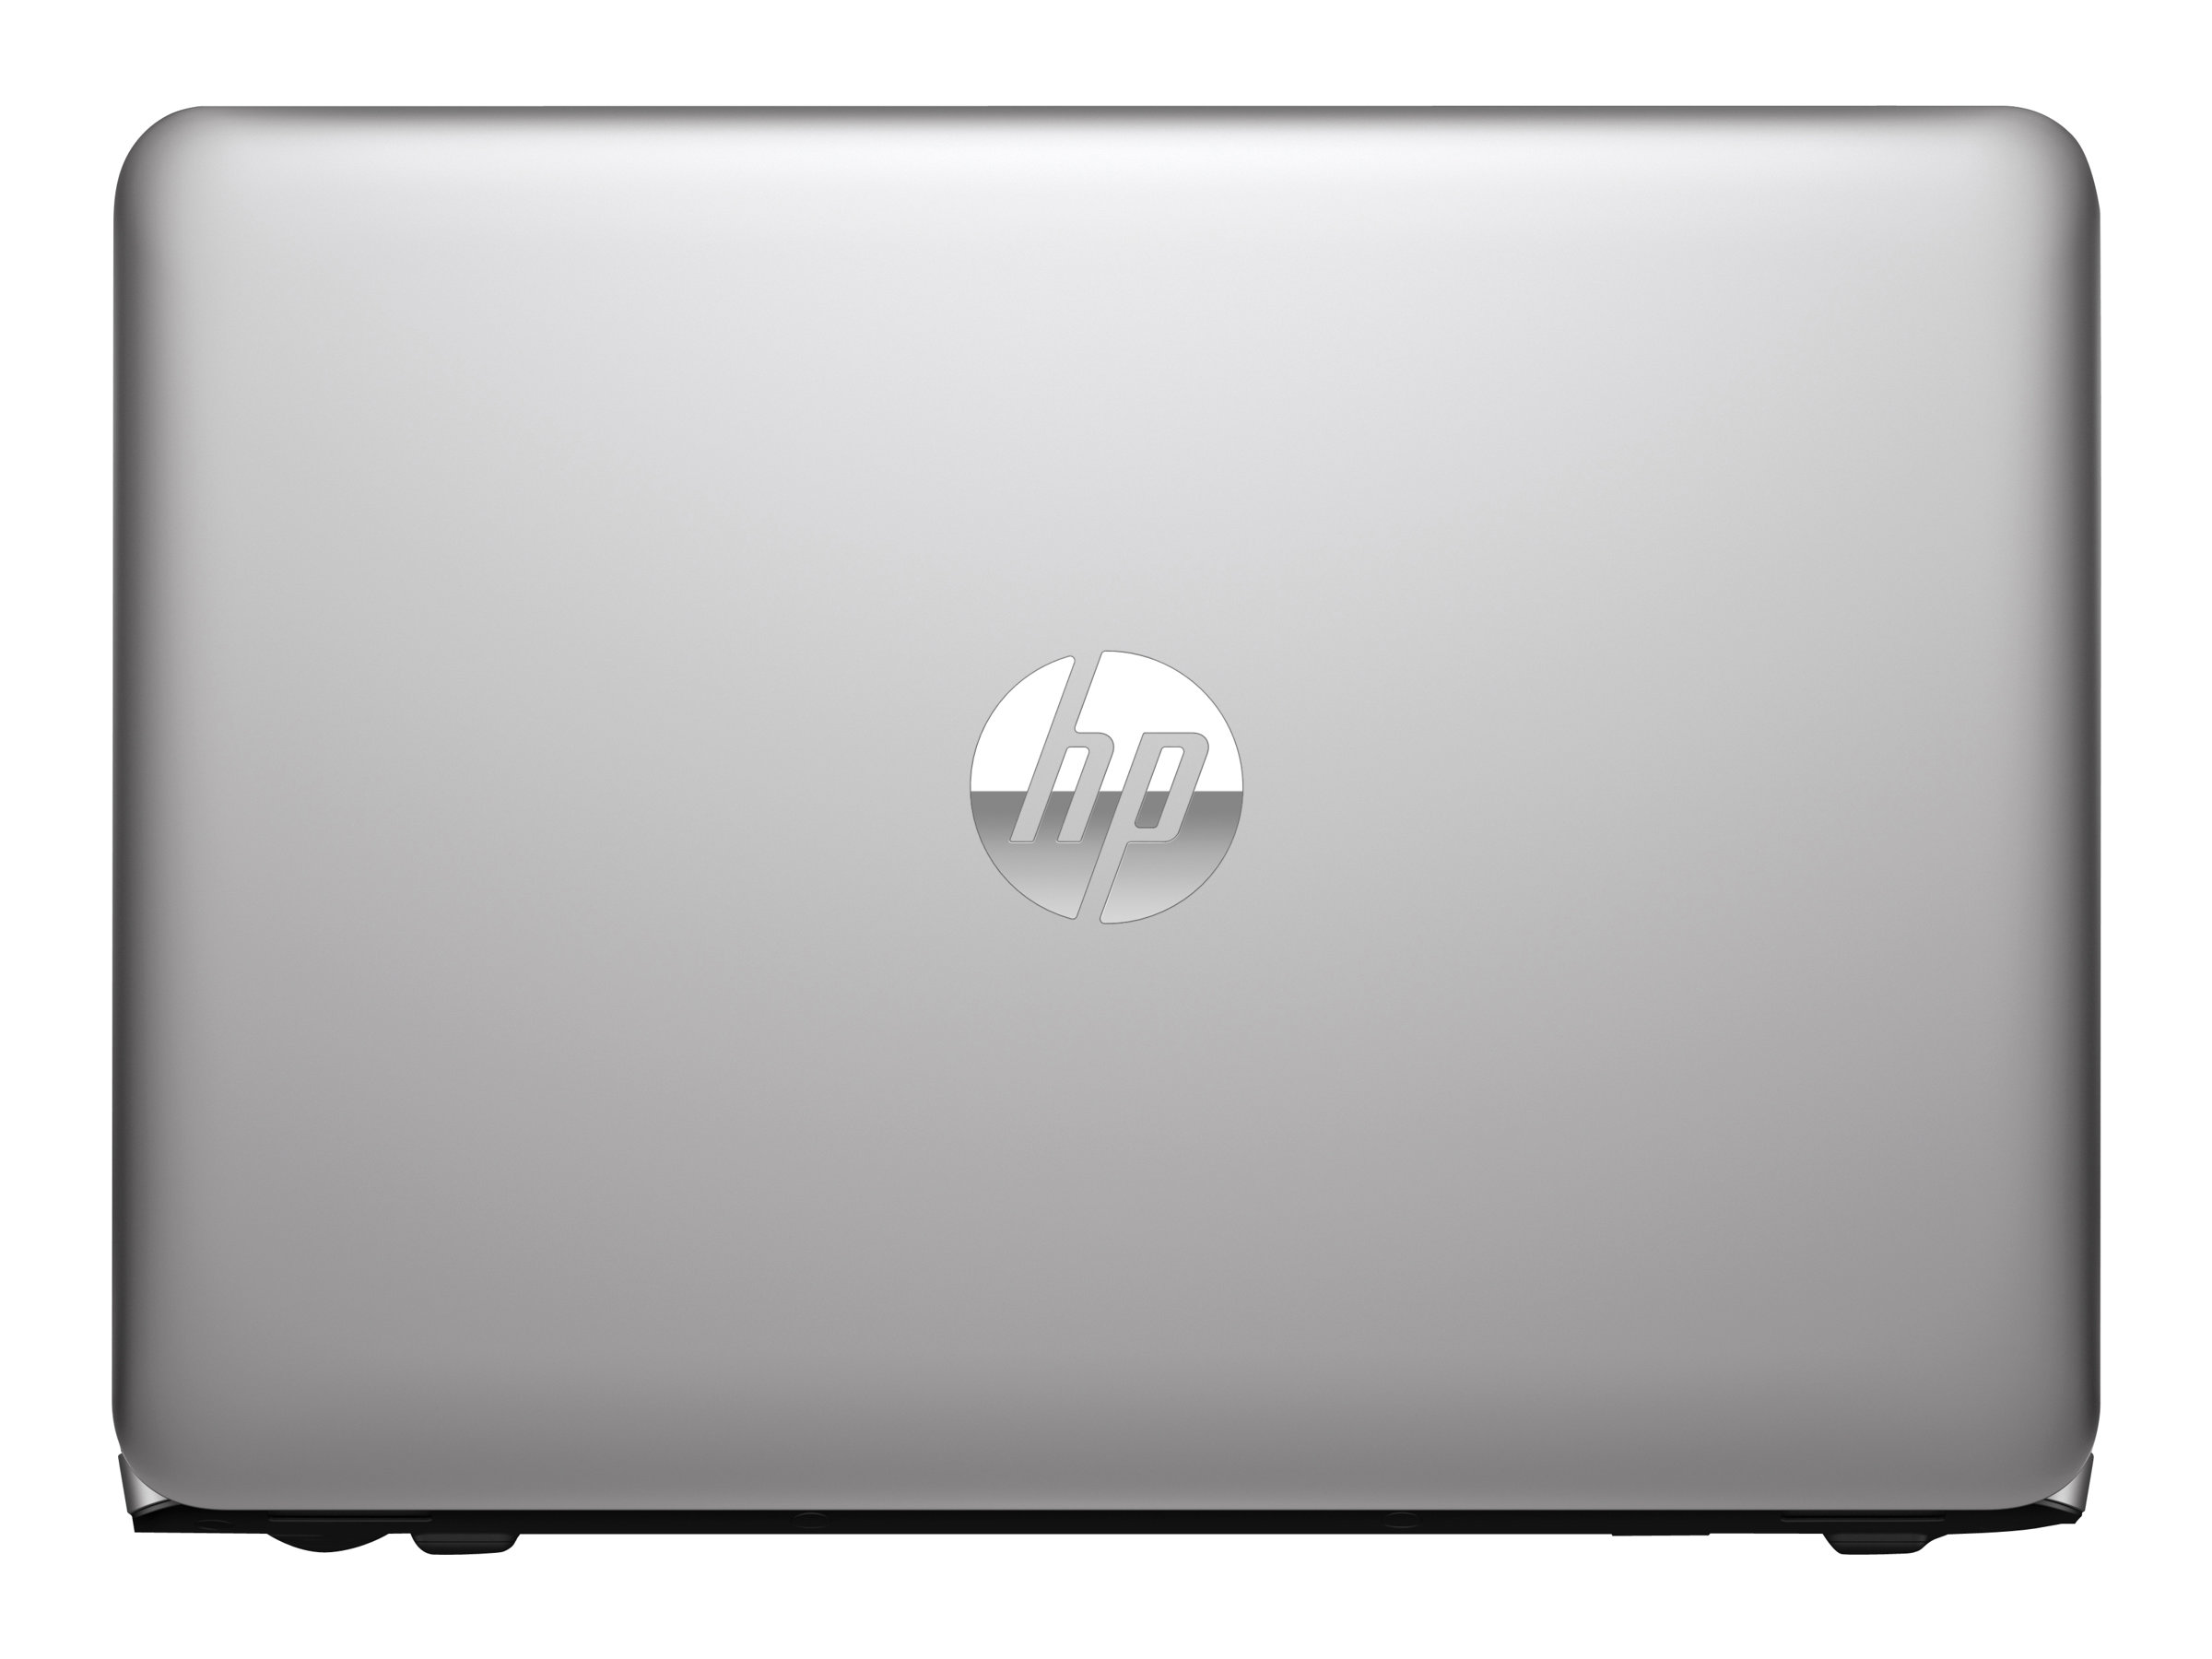 HP EliteBook 820 G3 - Core i5 6300U / 2.4 GHz | www.shi.com